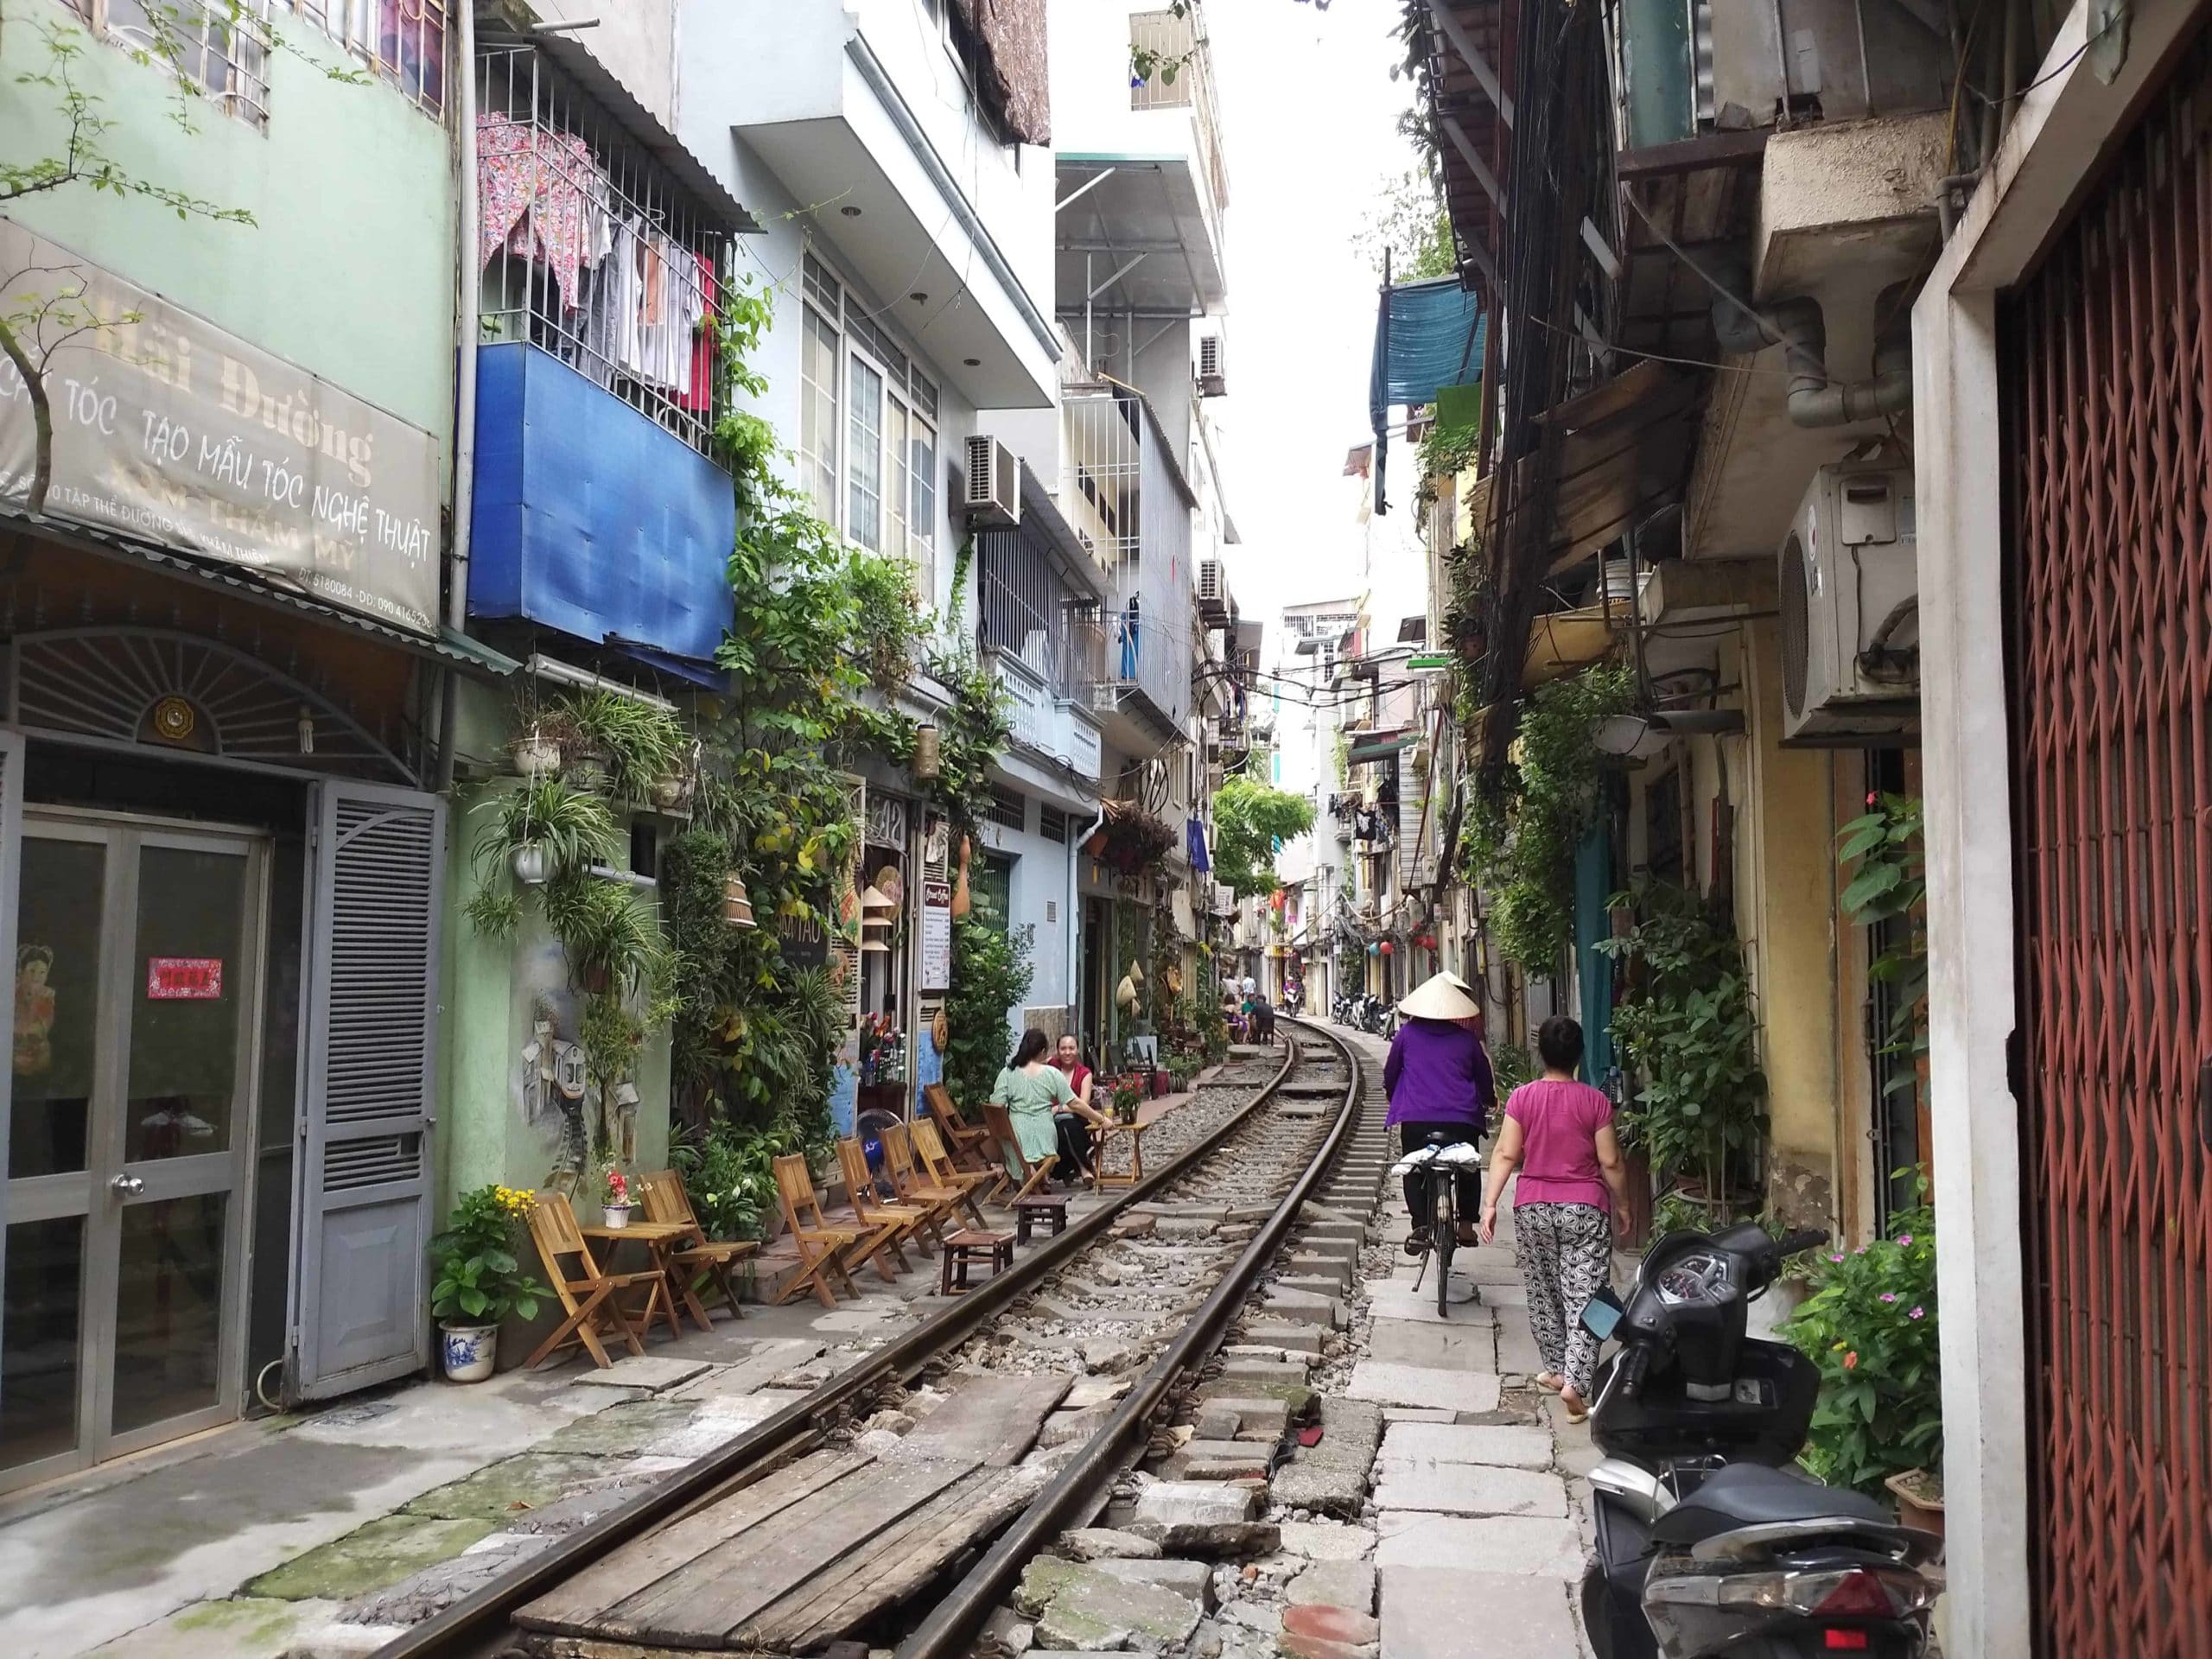 Train Street in Hanoi - we're going somewhere